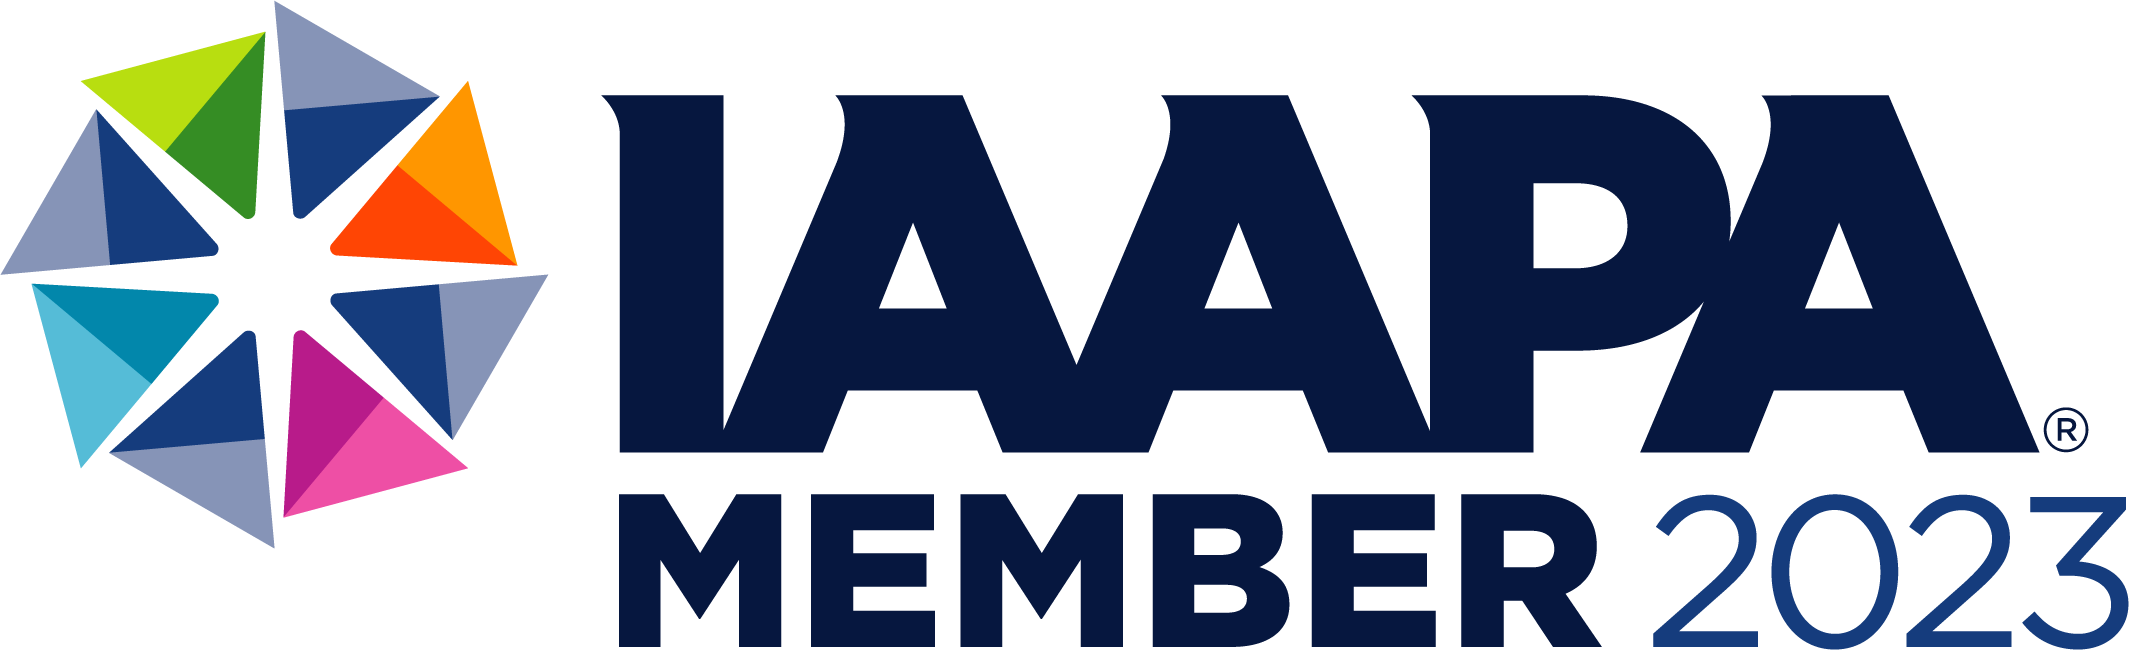 IAAPA Member 2023 logo